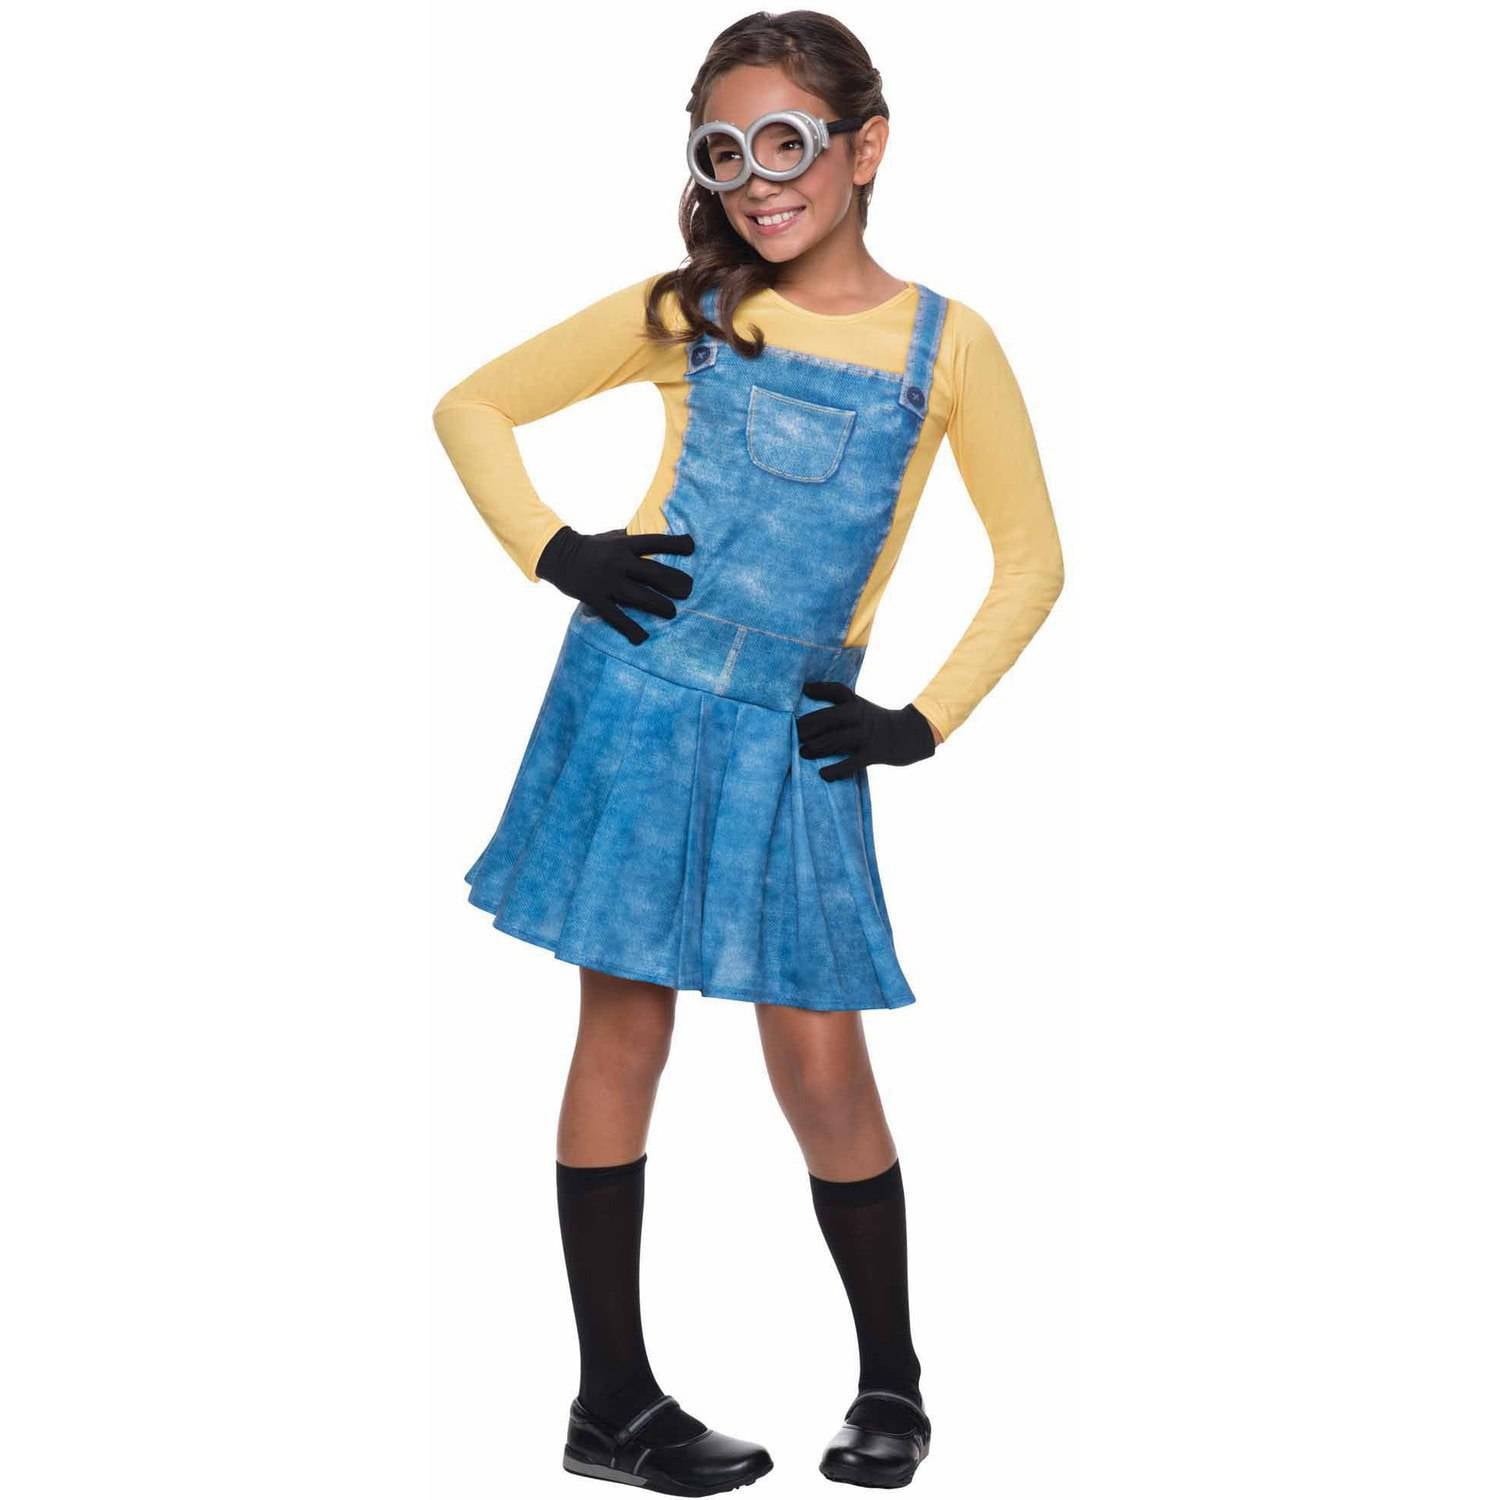 Minion Female Child Halloween Costume - Walmart.com - Walmart.com